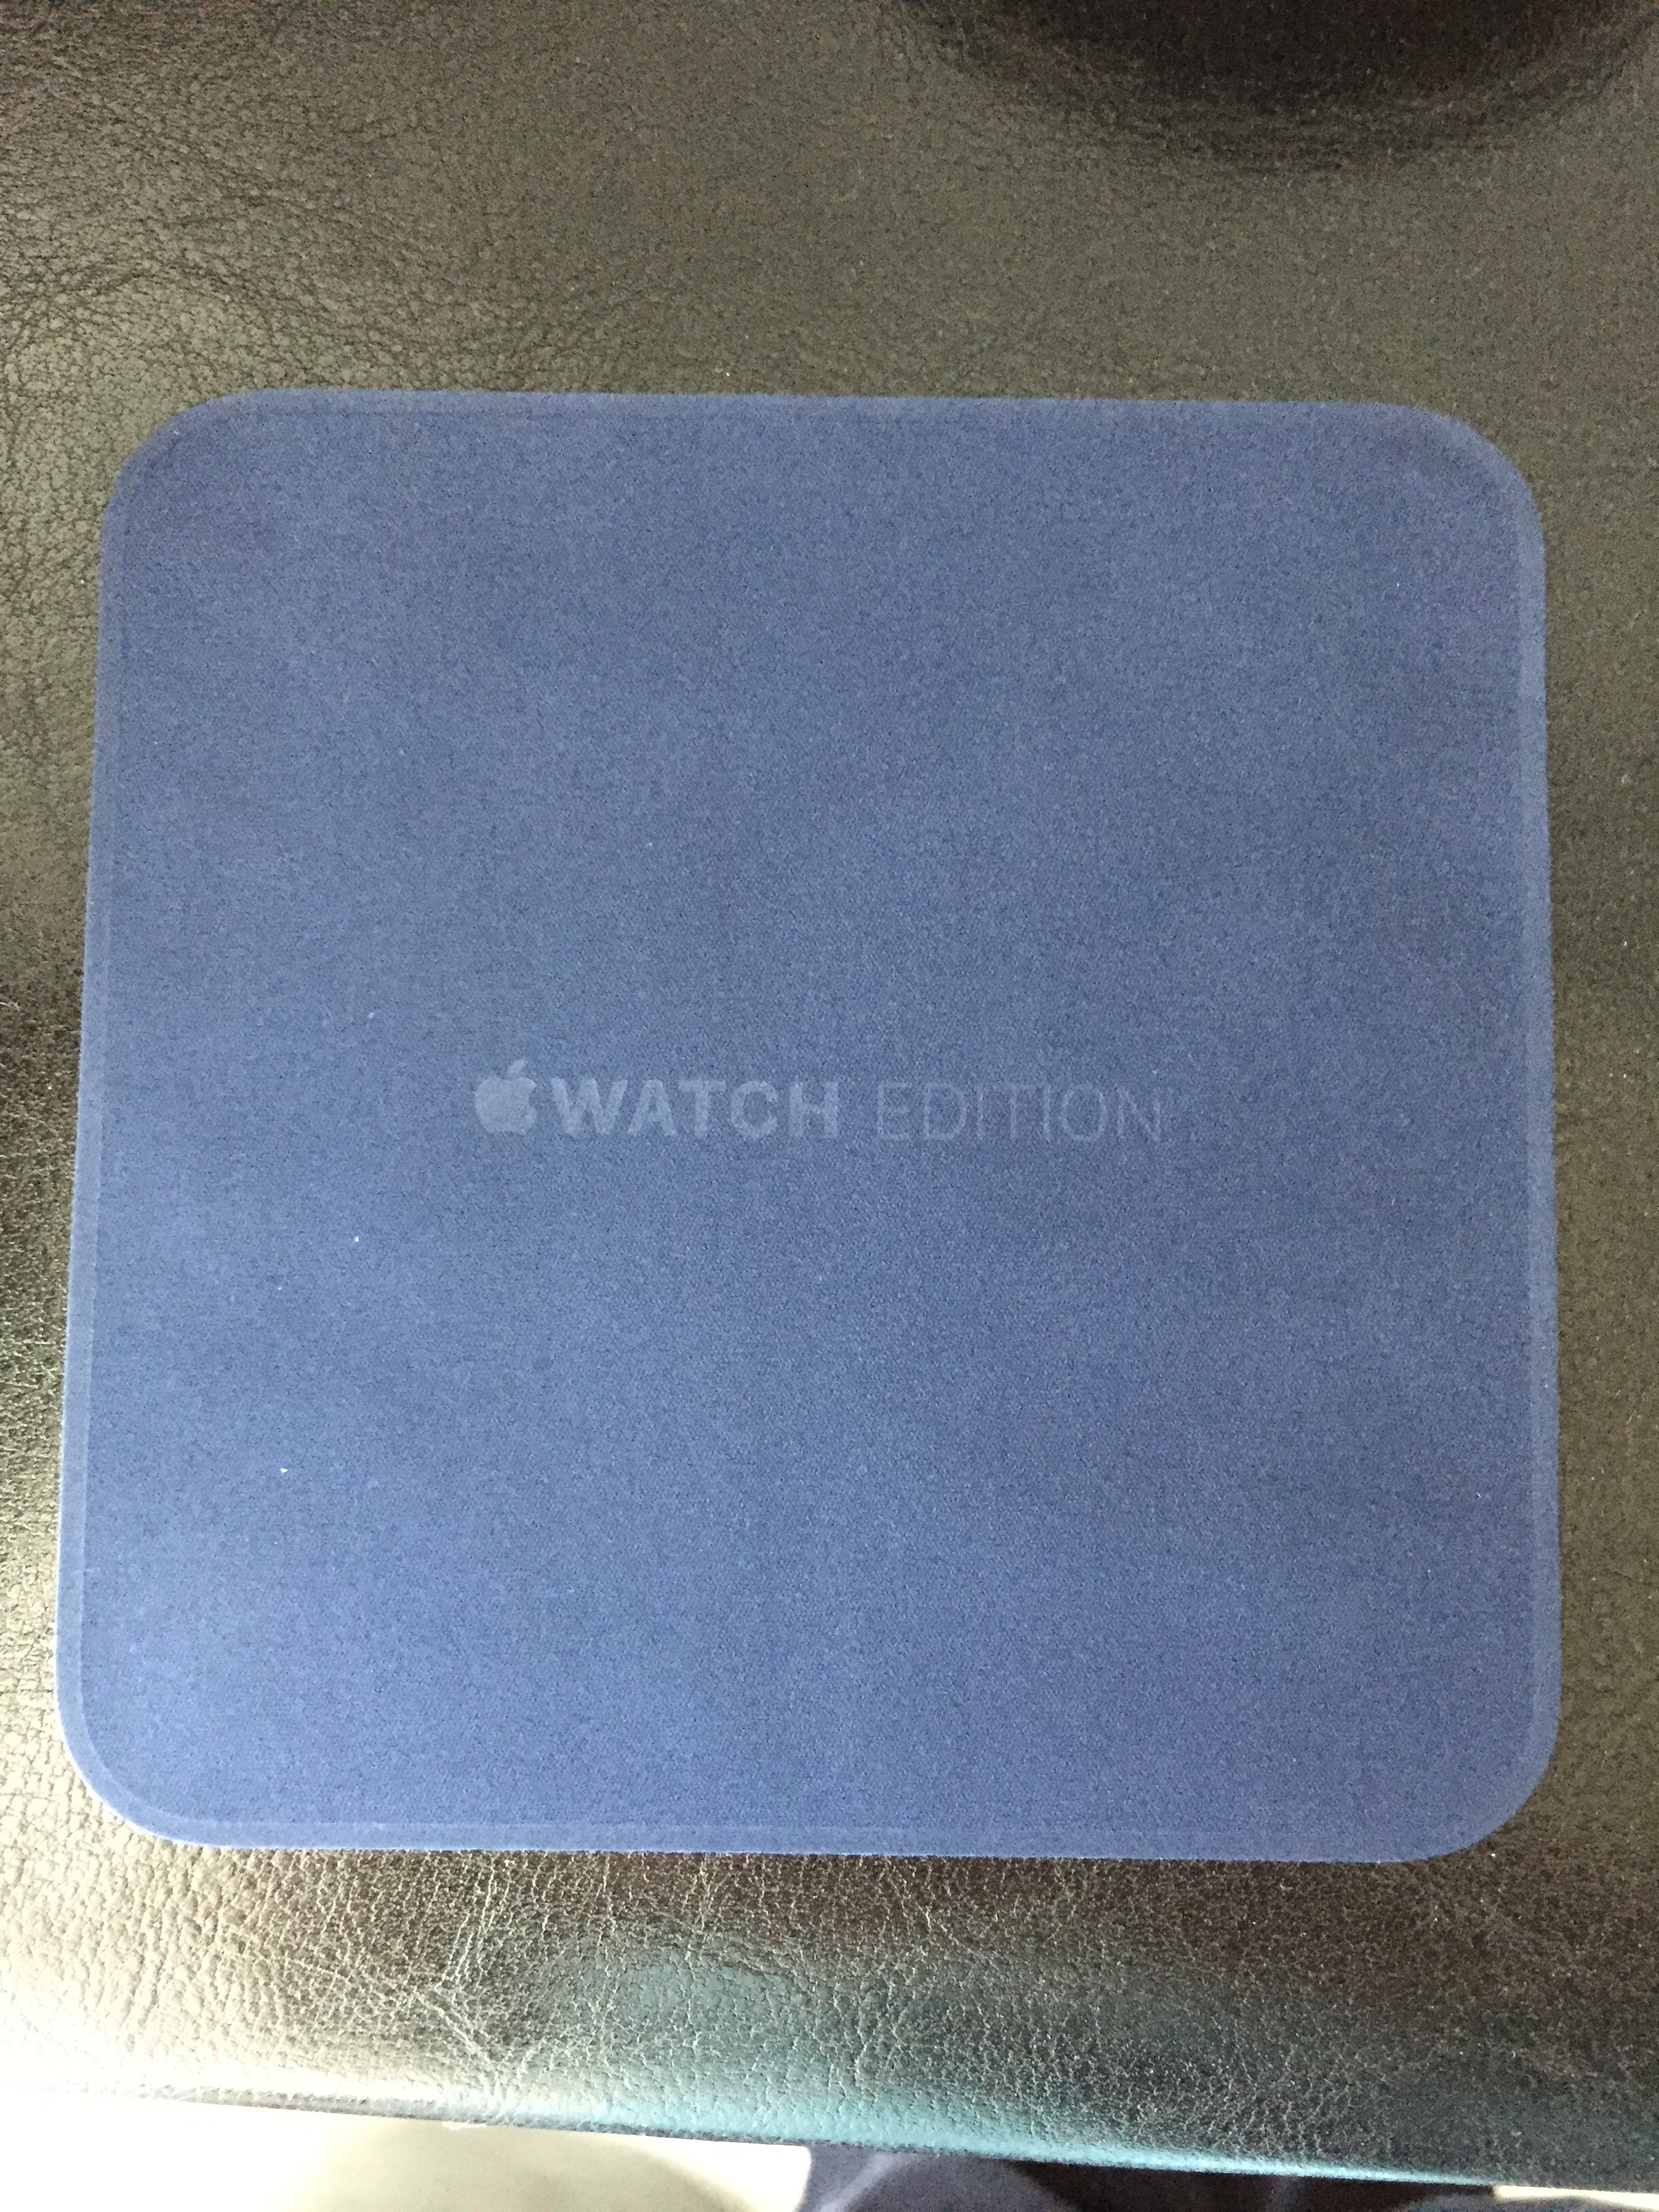 Caixa do Apple Watch Edition (ouro)